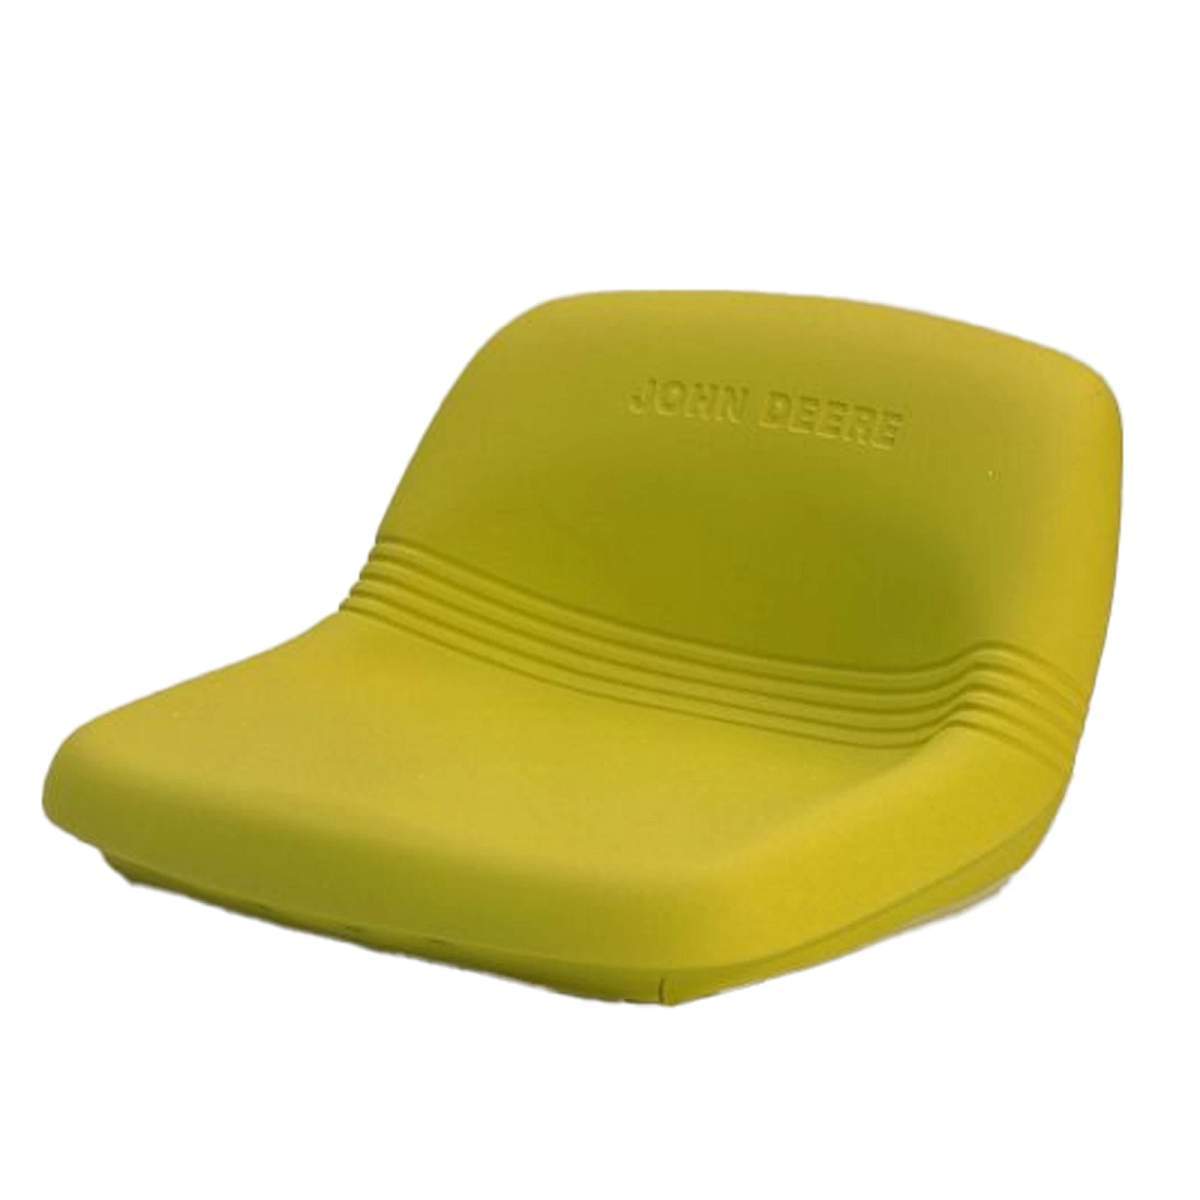 https://greenfarmparts.com/wp-content/uploads/2019/01/John-Deere-Yellow-Seat-Cushion-AM117446.jpg